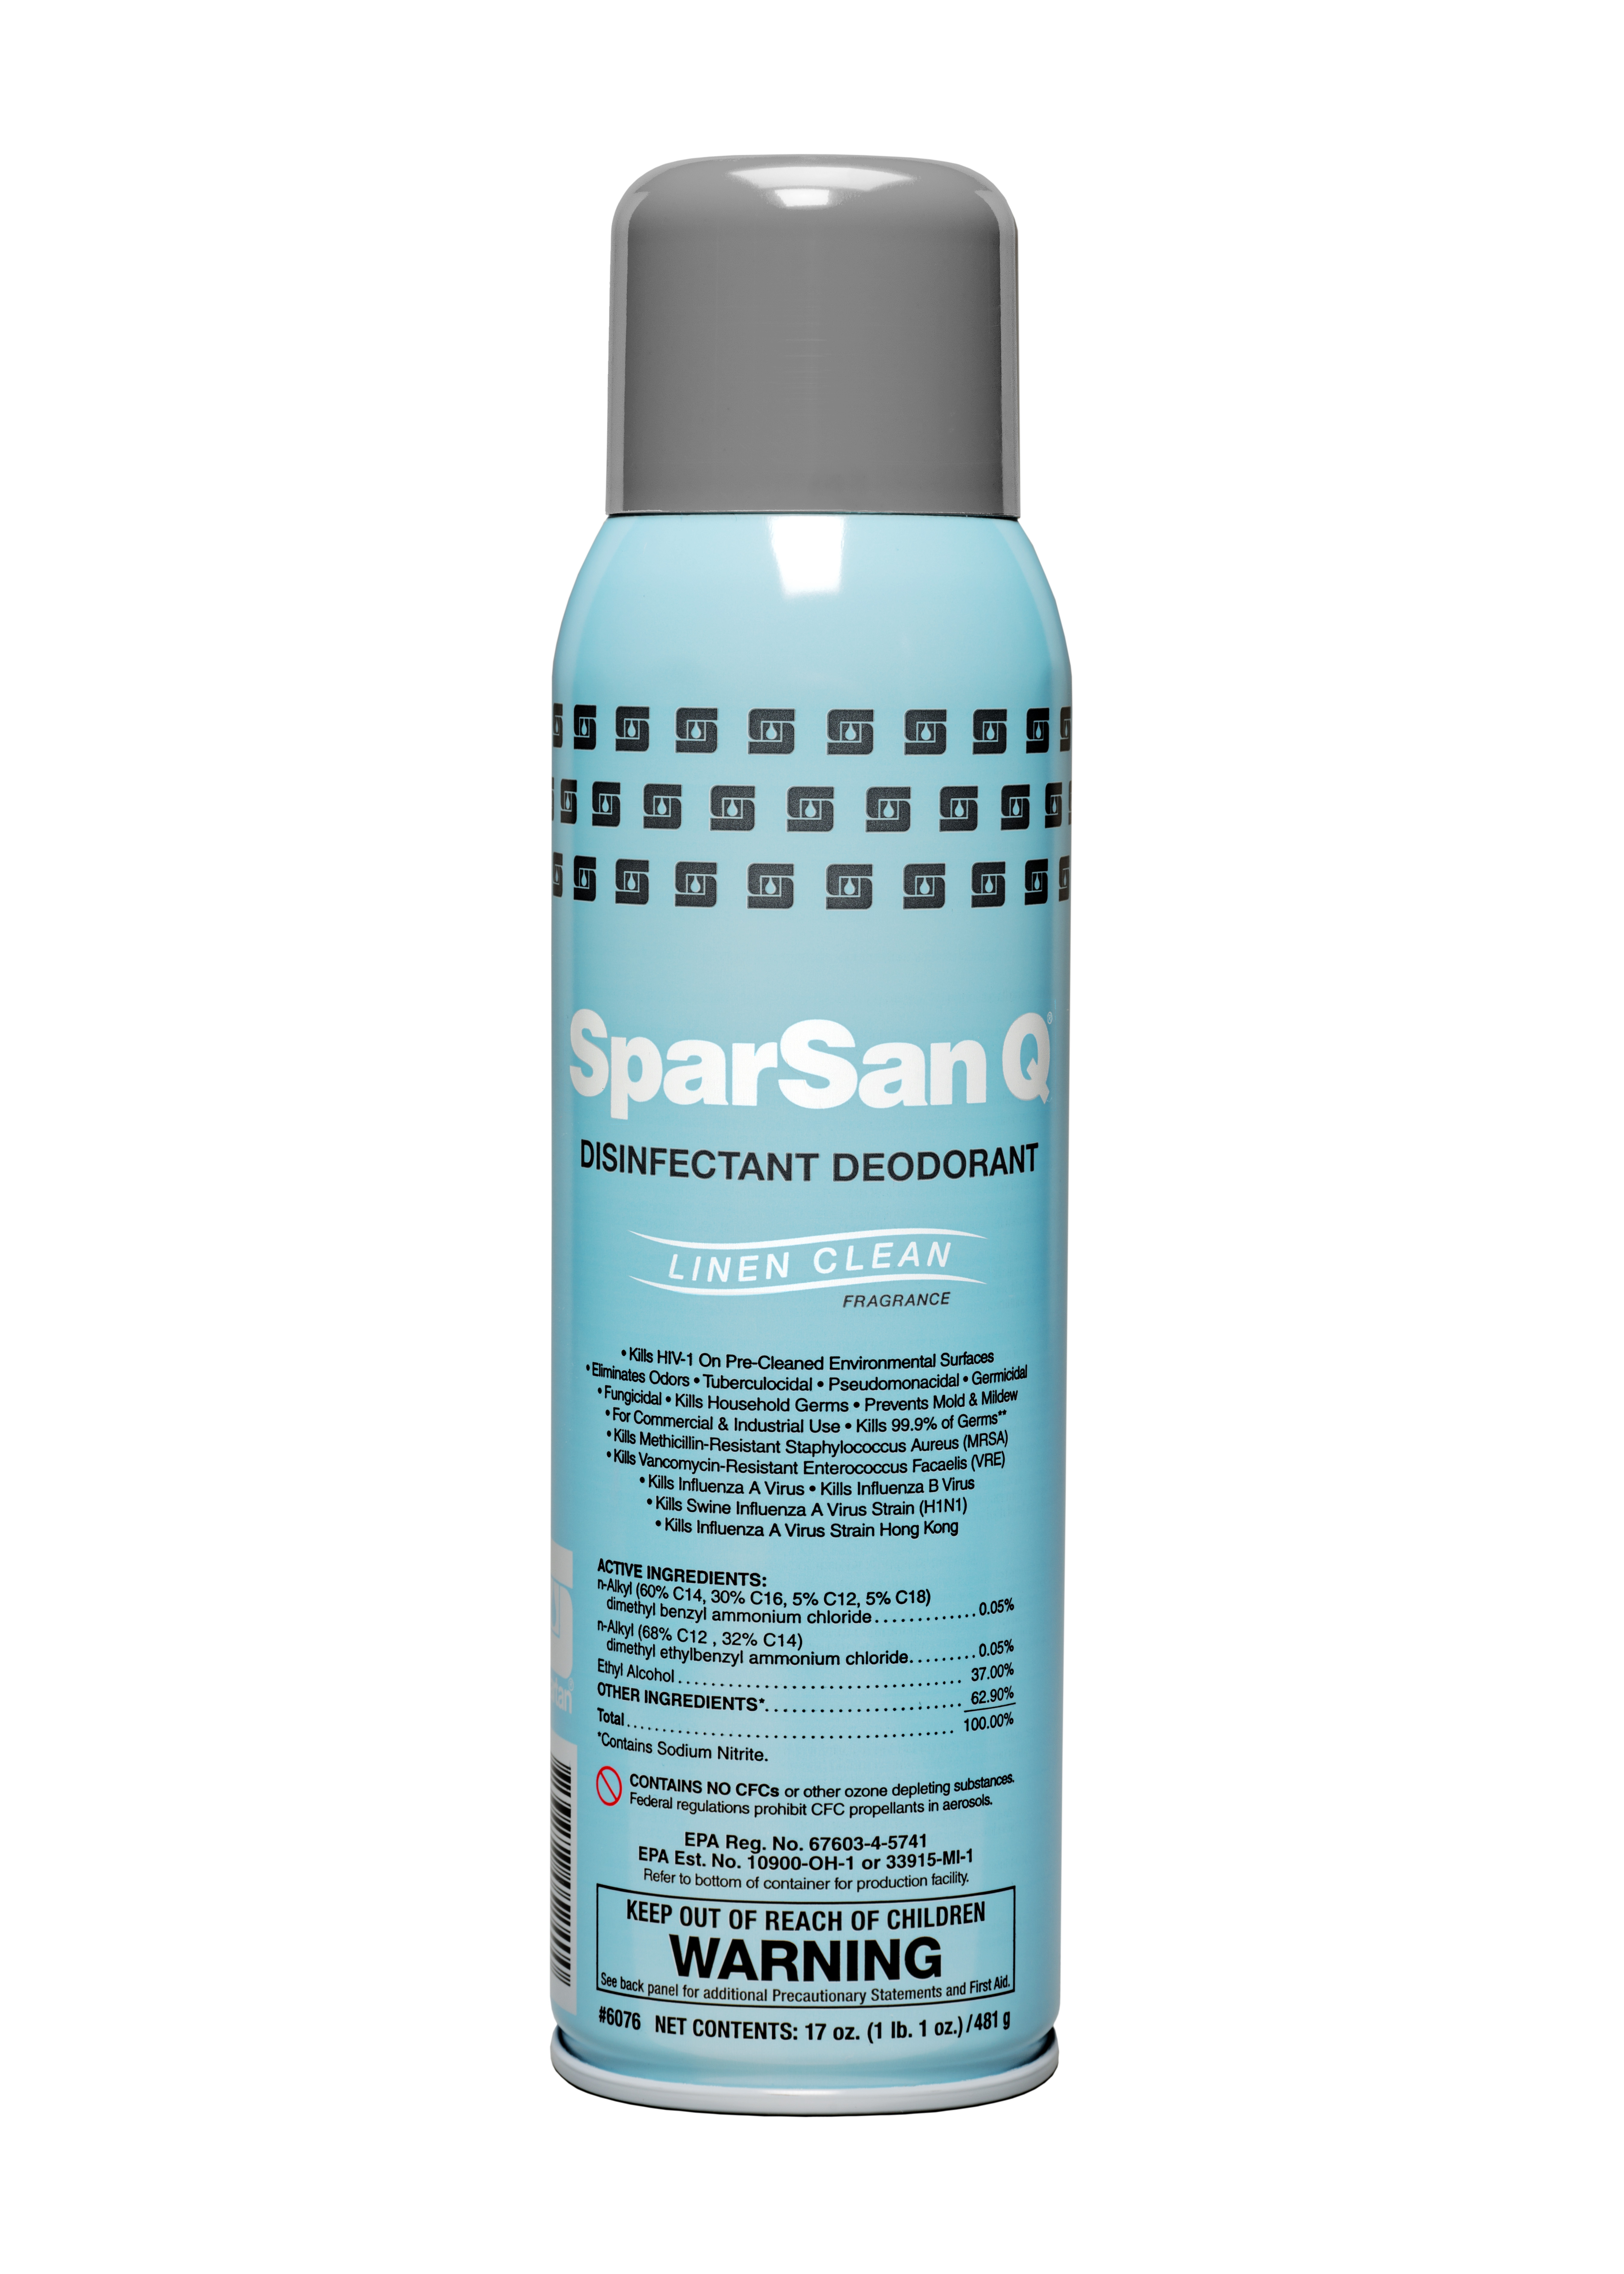 Spartan Chemical Company SparSan Q Disinfectant Deodorant Linen Clean Fragrance, 12-20 OZ.CAN